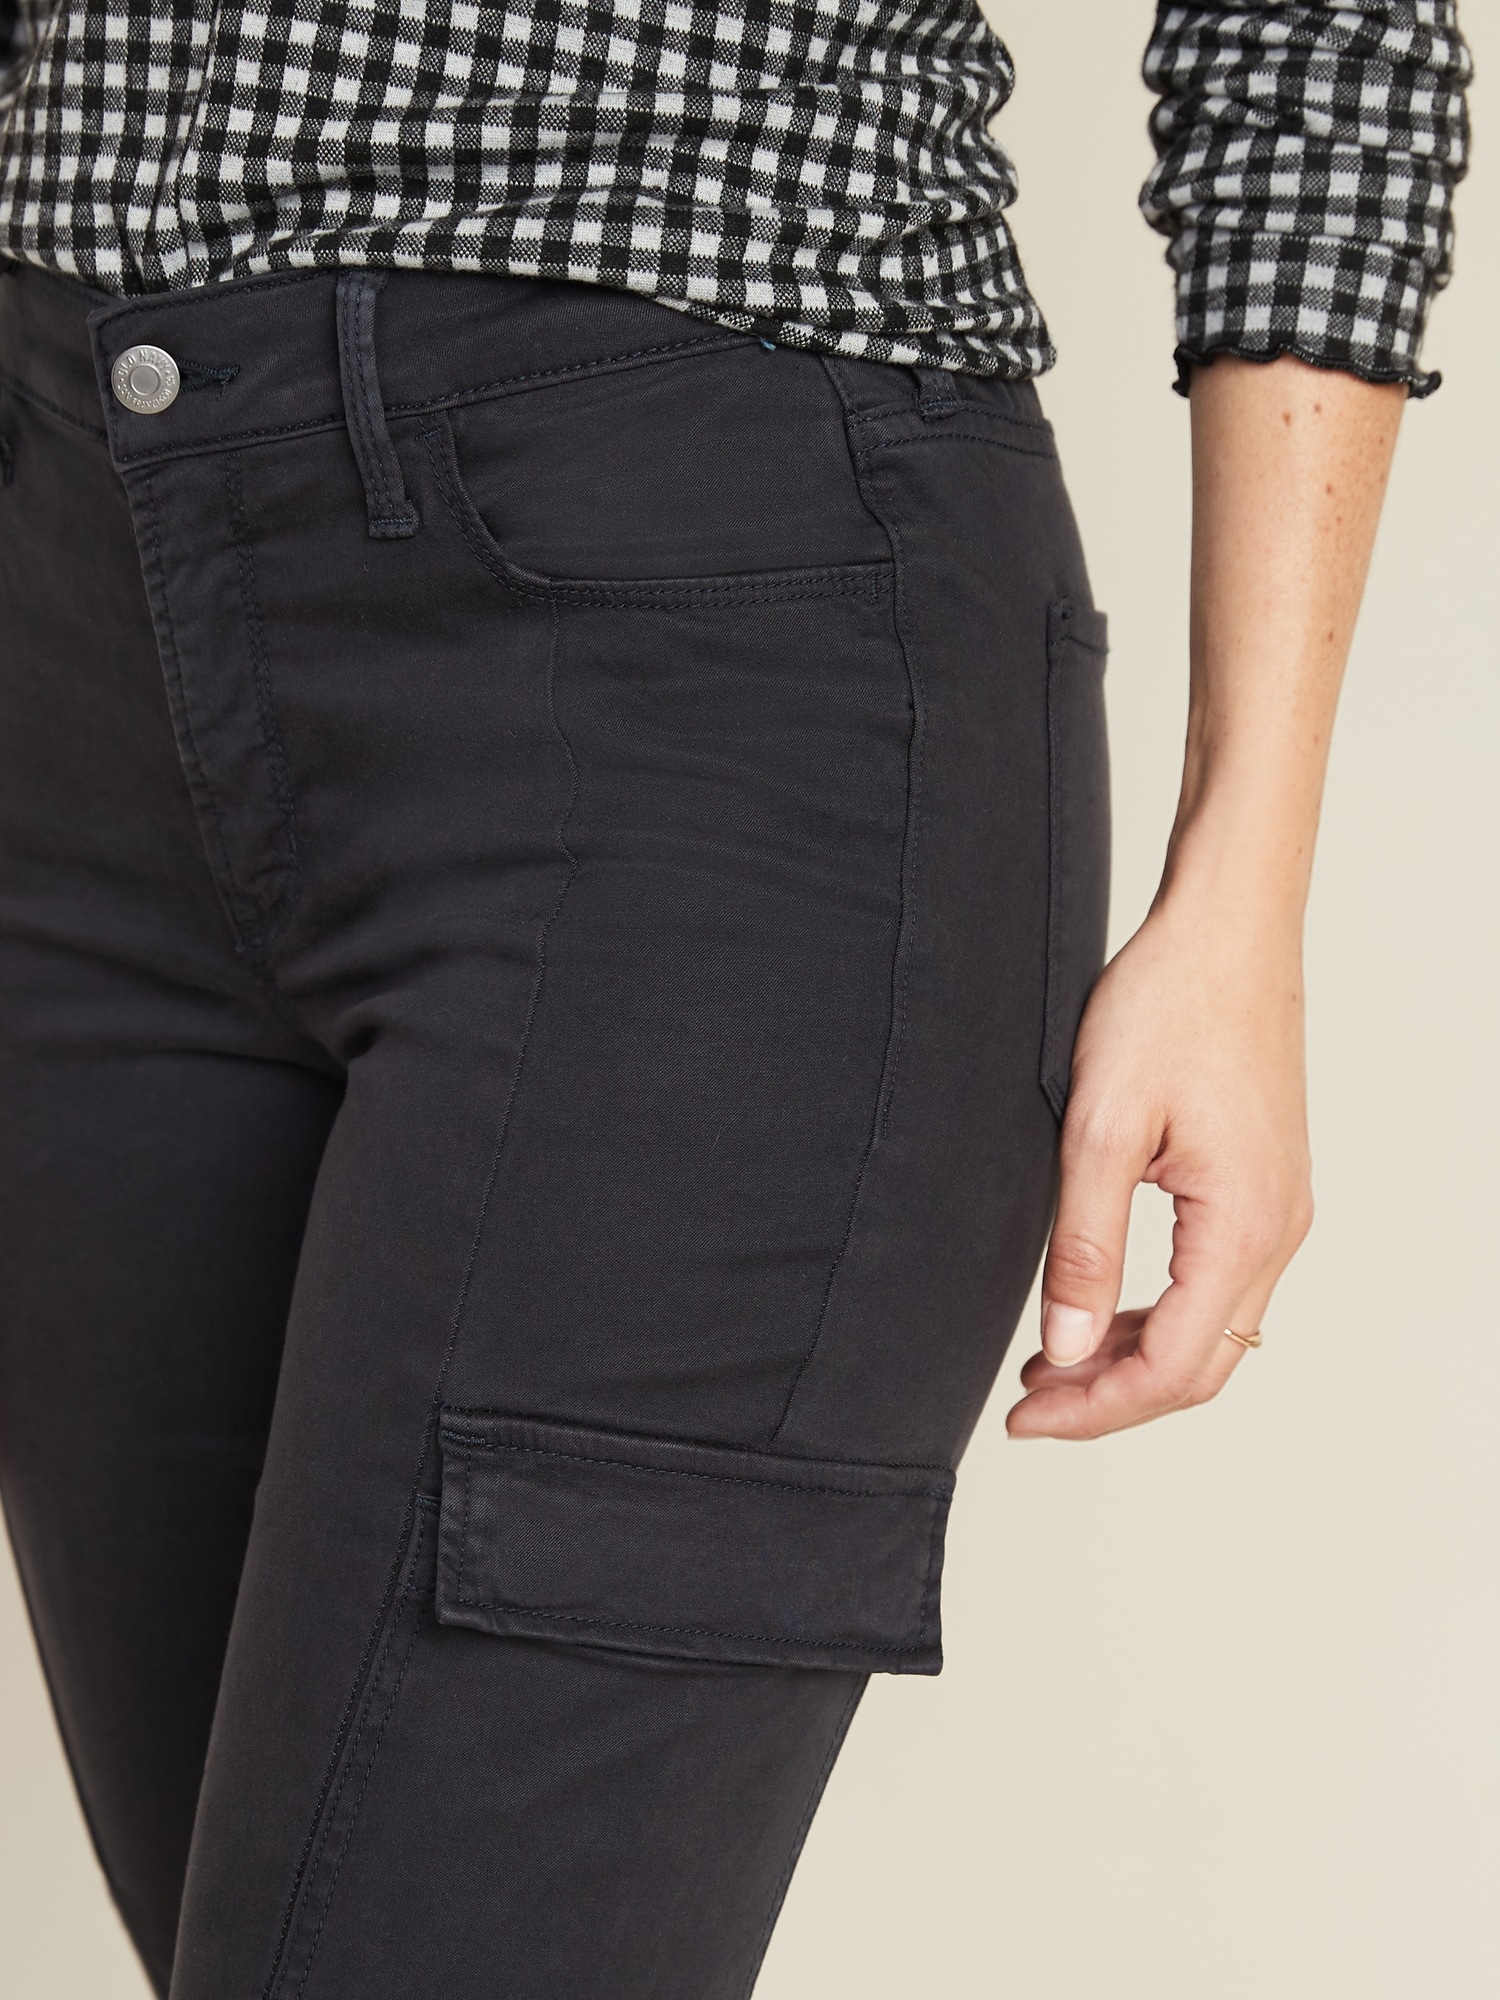 black cargo skinny jeans womens